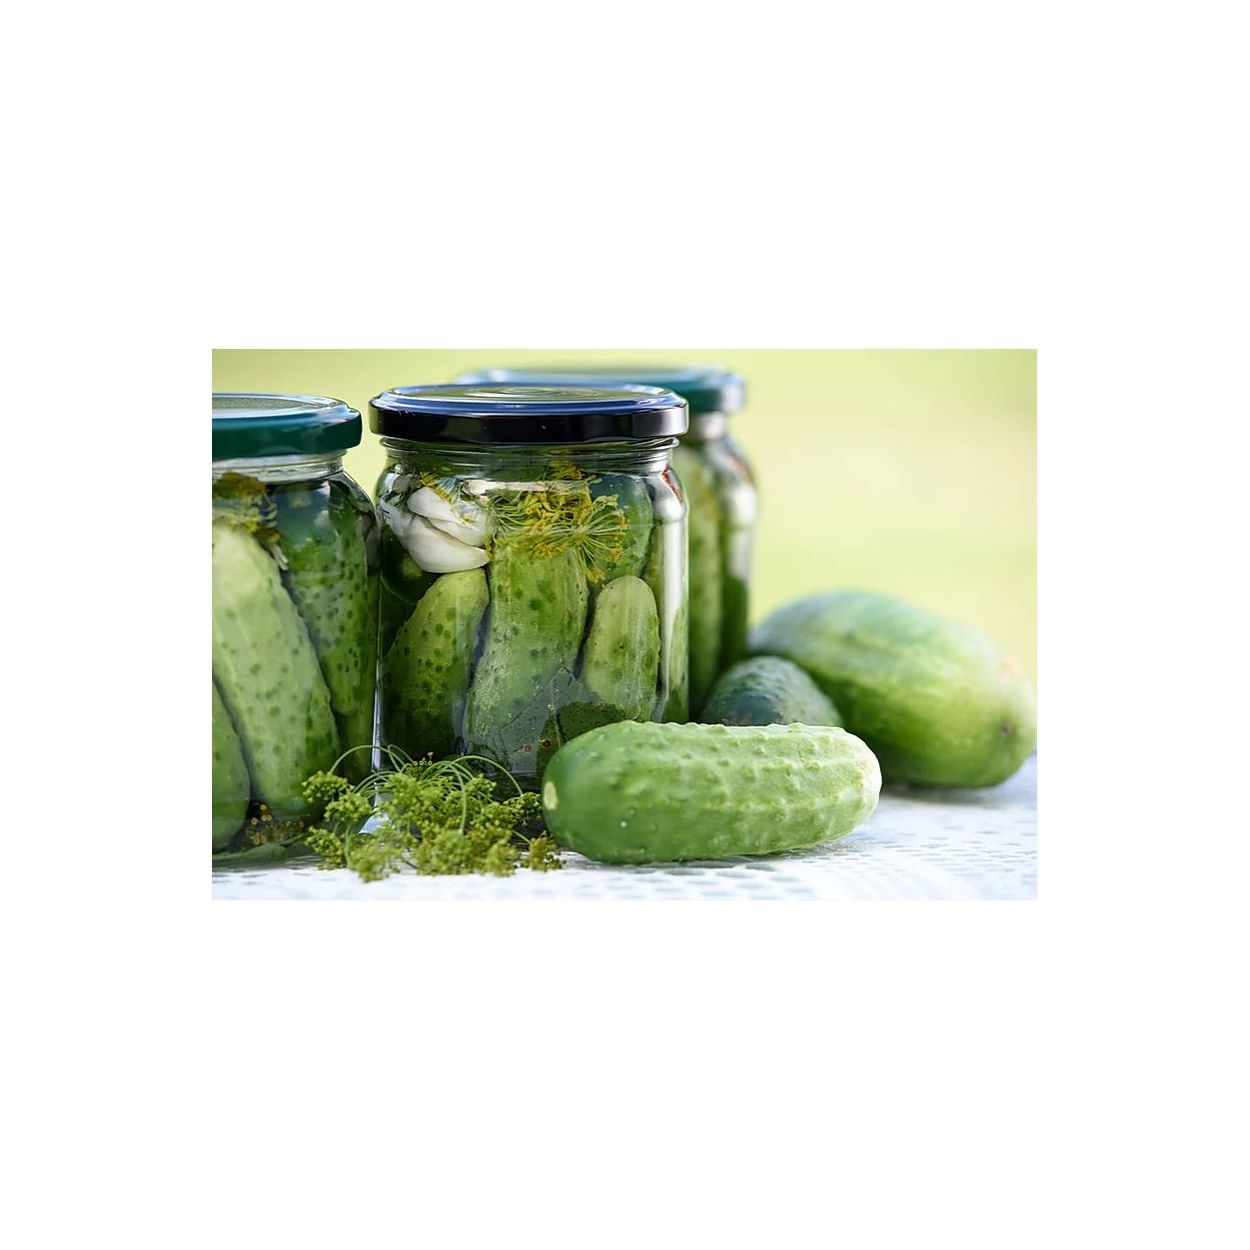 Brim Seed Co. - Homemade Pickles Cucumber Heirloom Seed